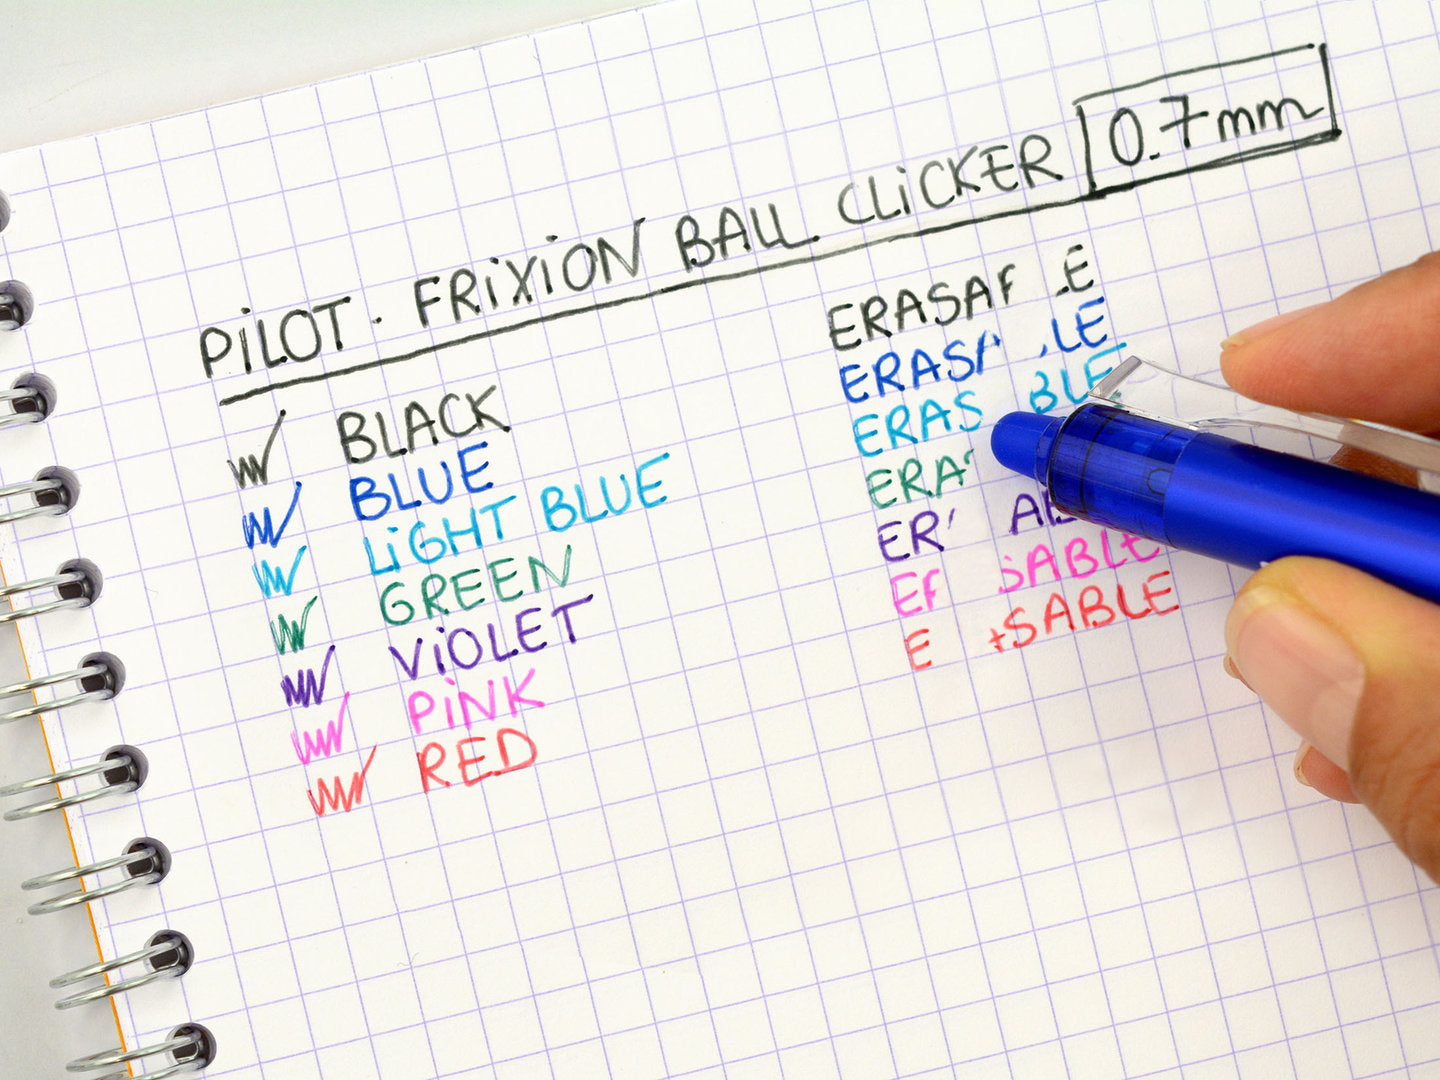 Pilot Frixion Ball Clicker 0,7 - vihreä